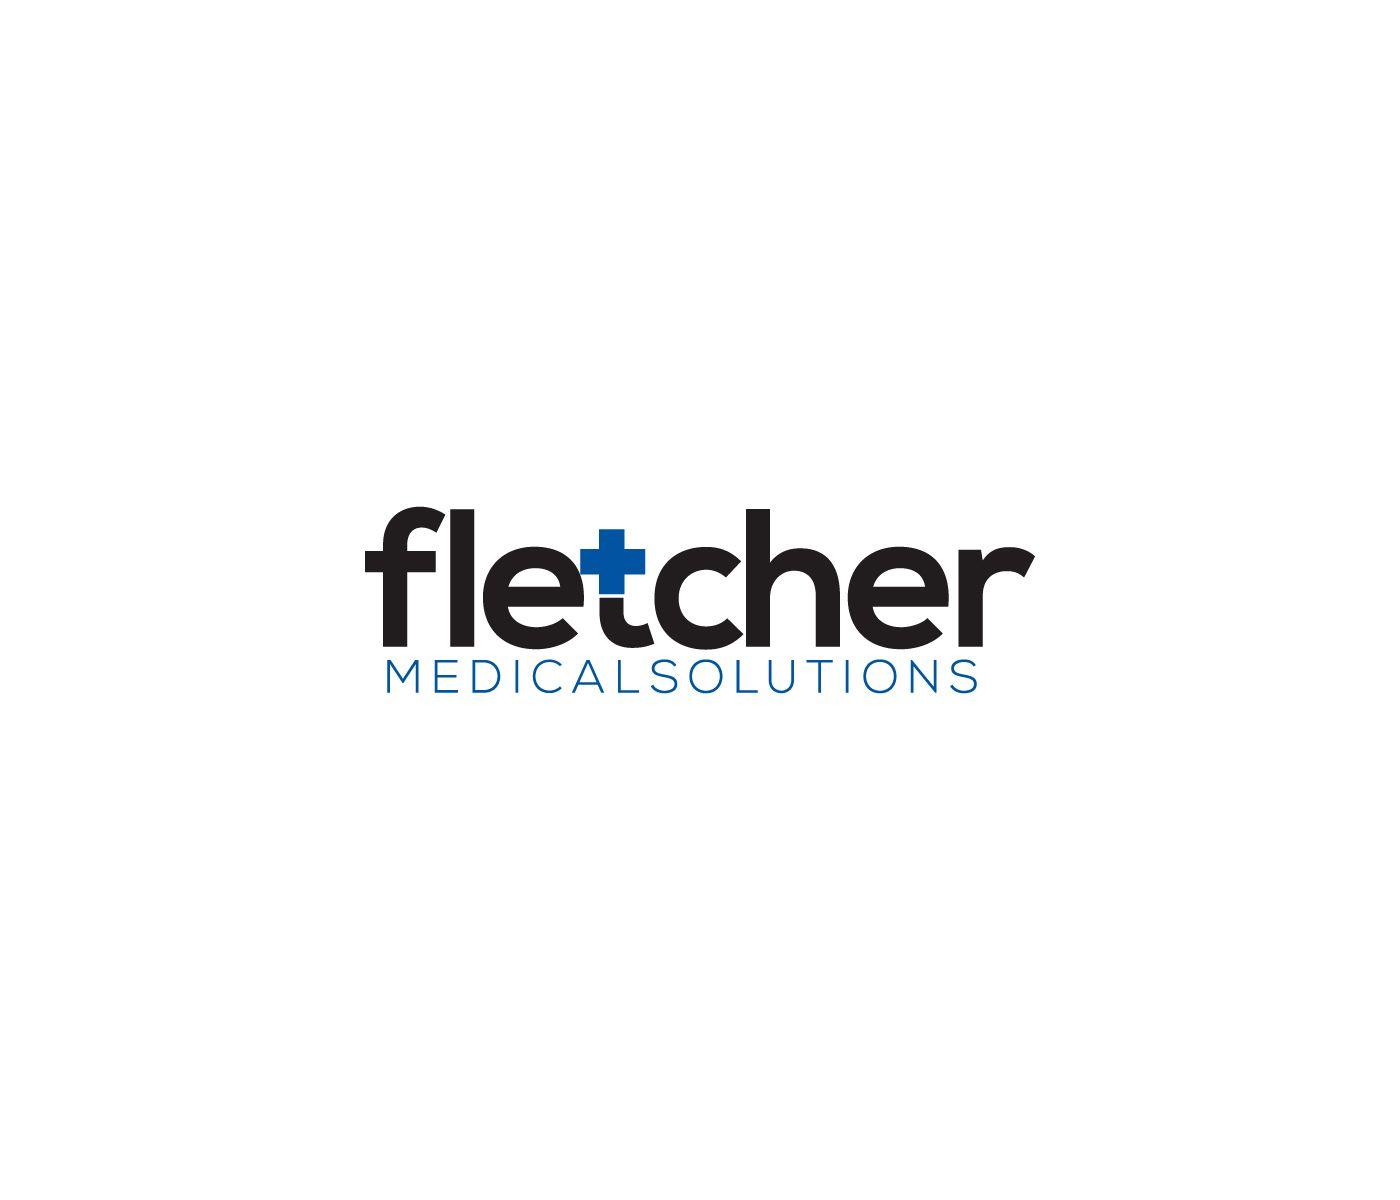 Fletcher Logo - Serious, Modern Logo Design for Fletcher Medical Solutions